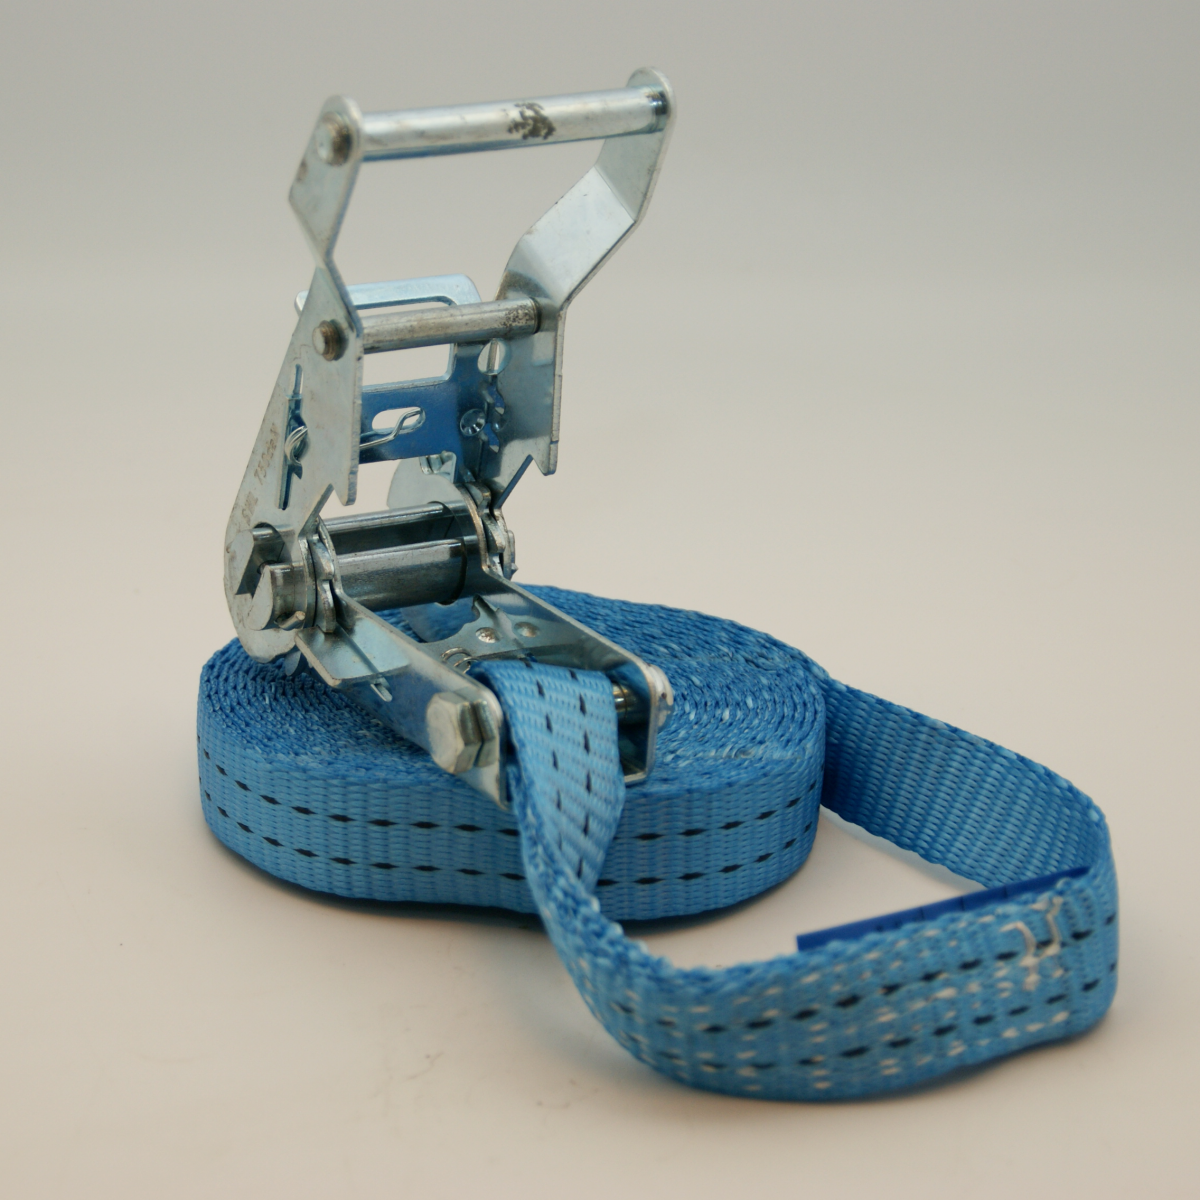 Sjorband: Spanband eindloos blauw, 25mm 1500daN 3m